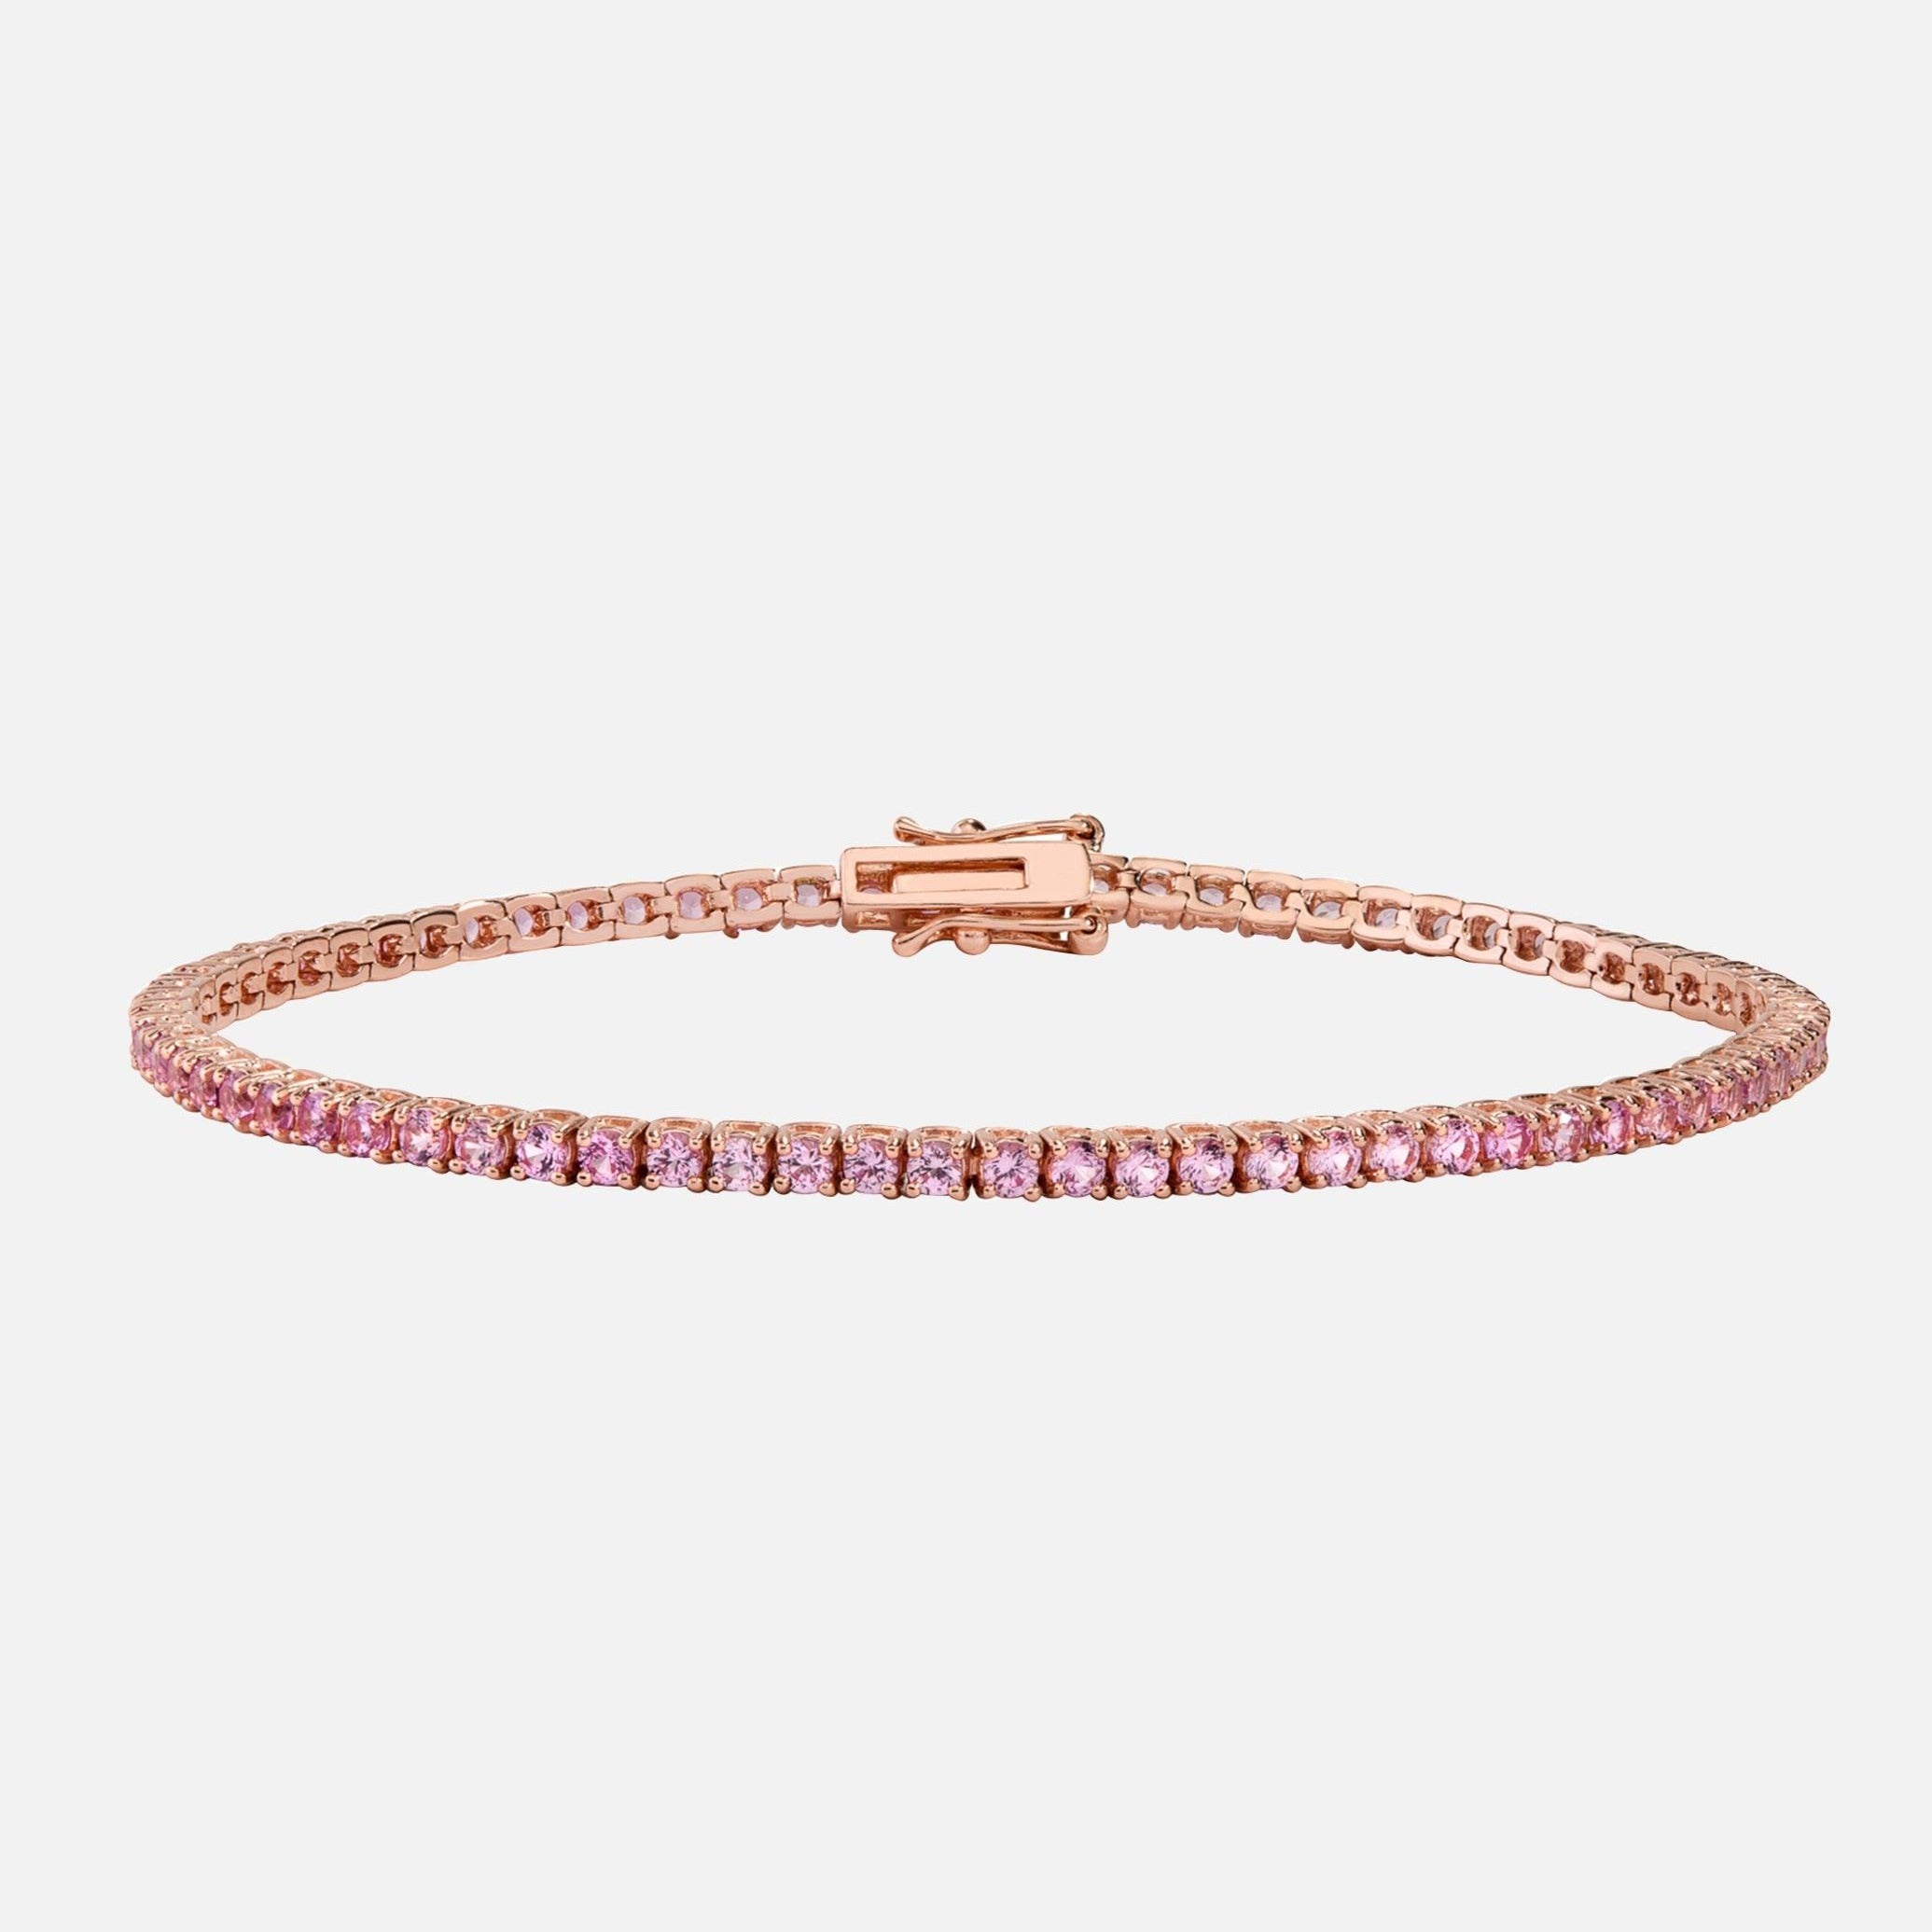 At Present Pink Sapphire Bracelet 1